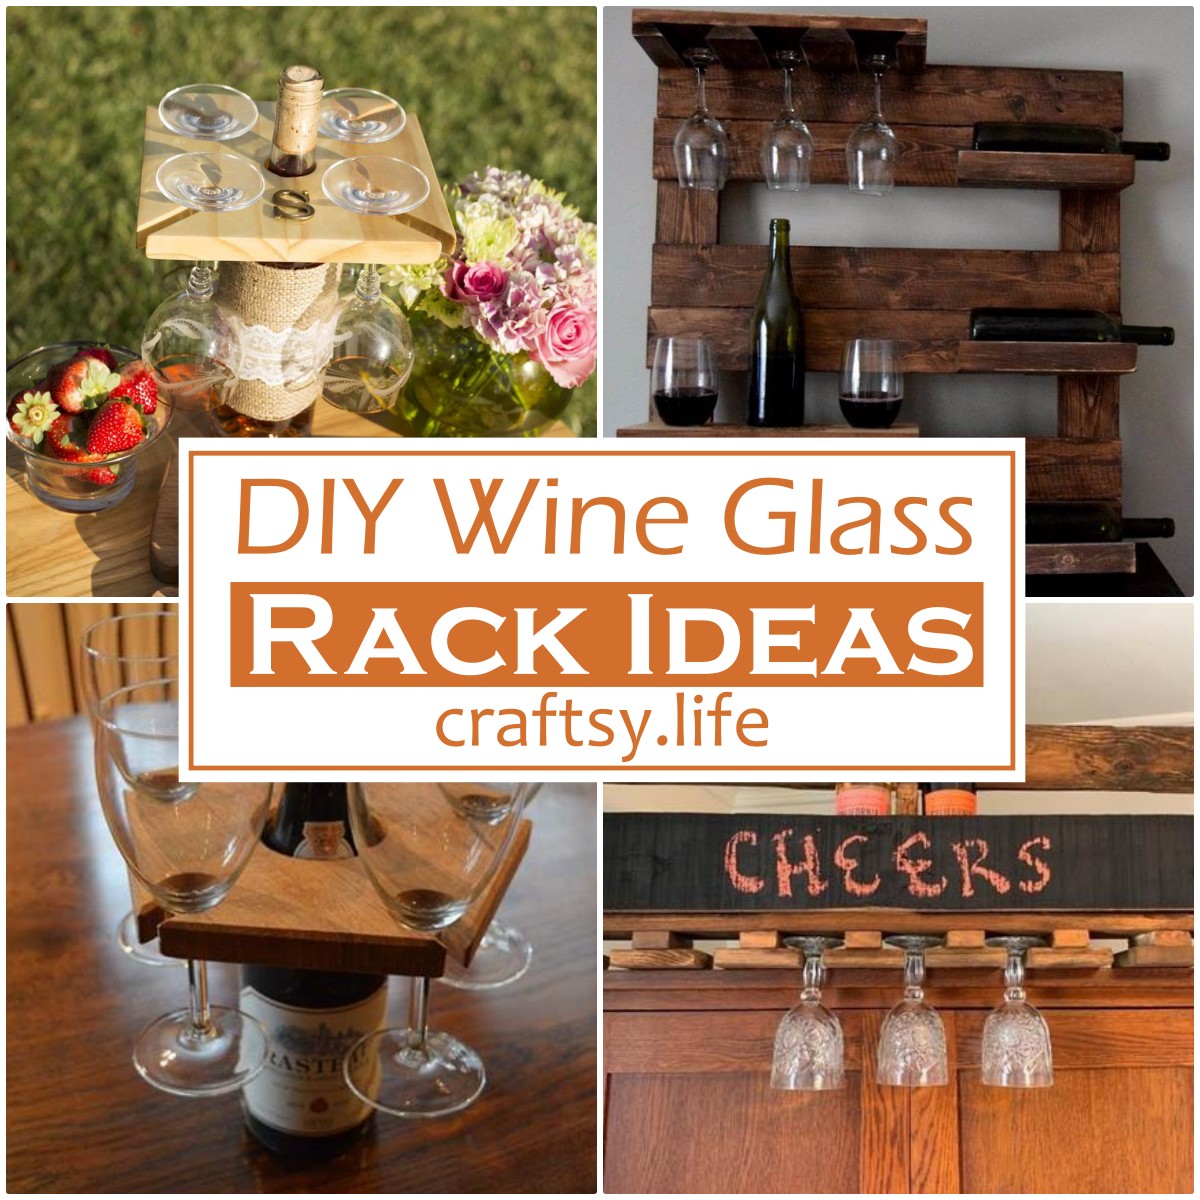 DIY Wine Glass Rack Ideas